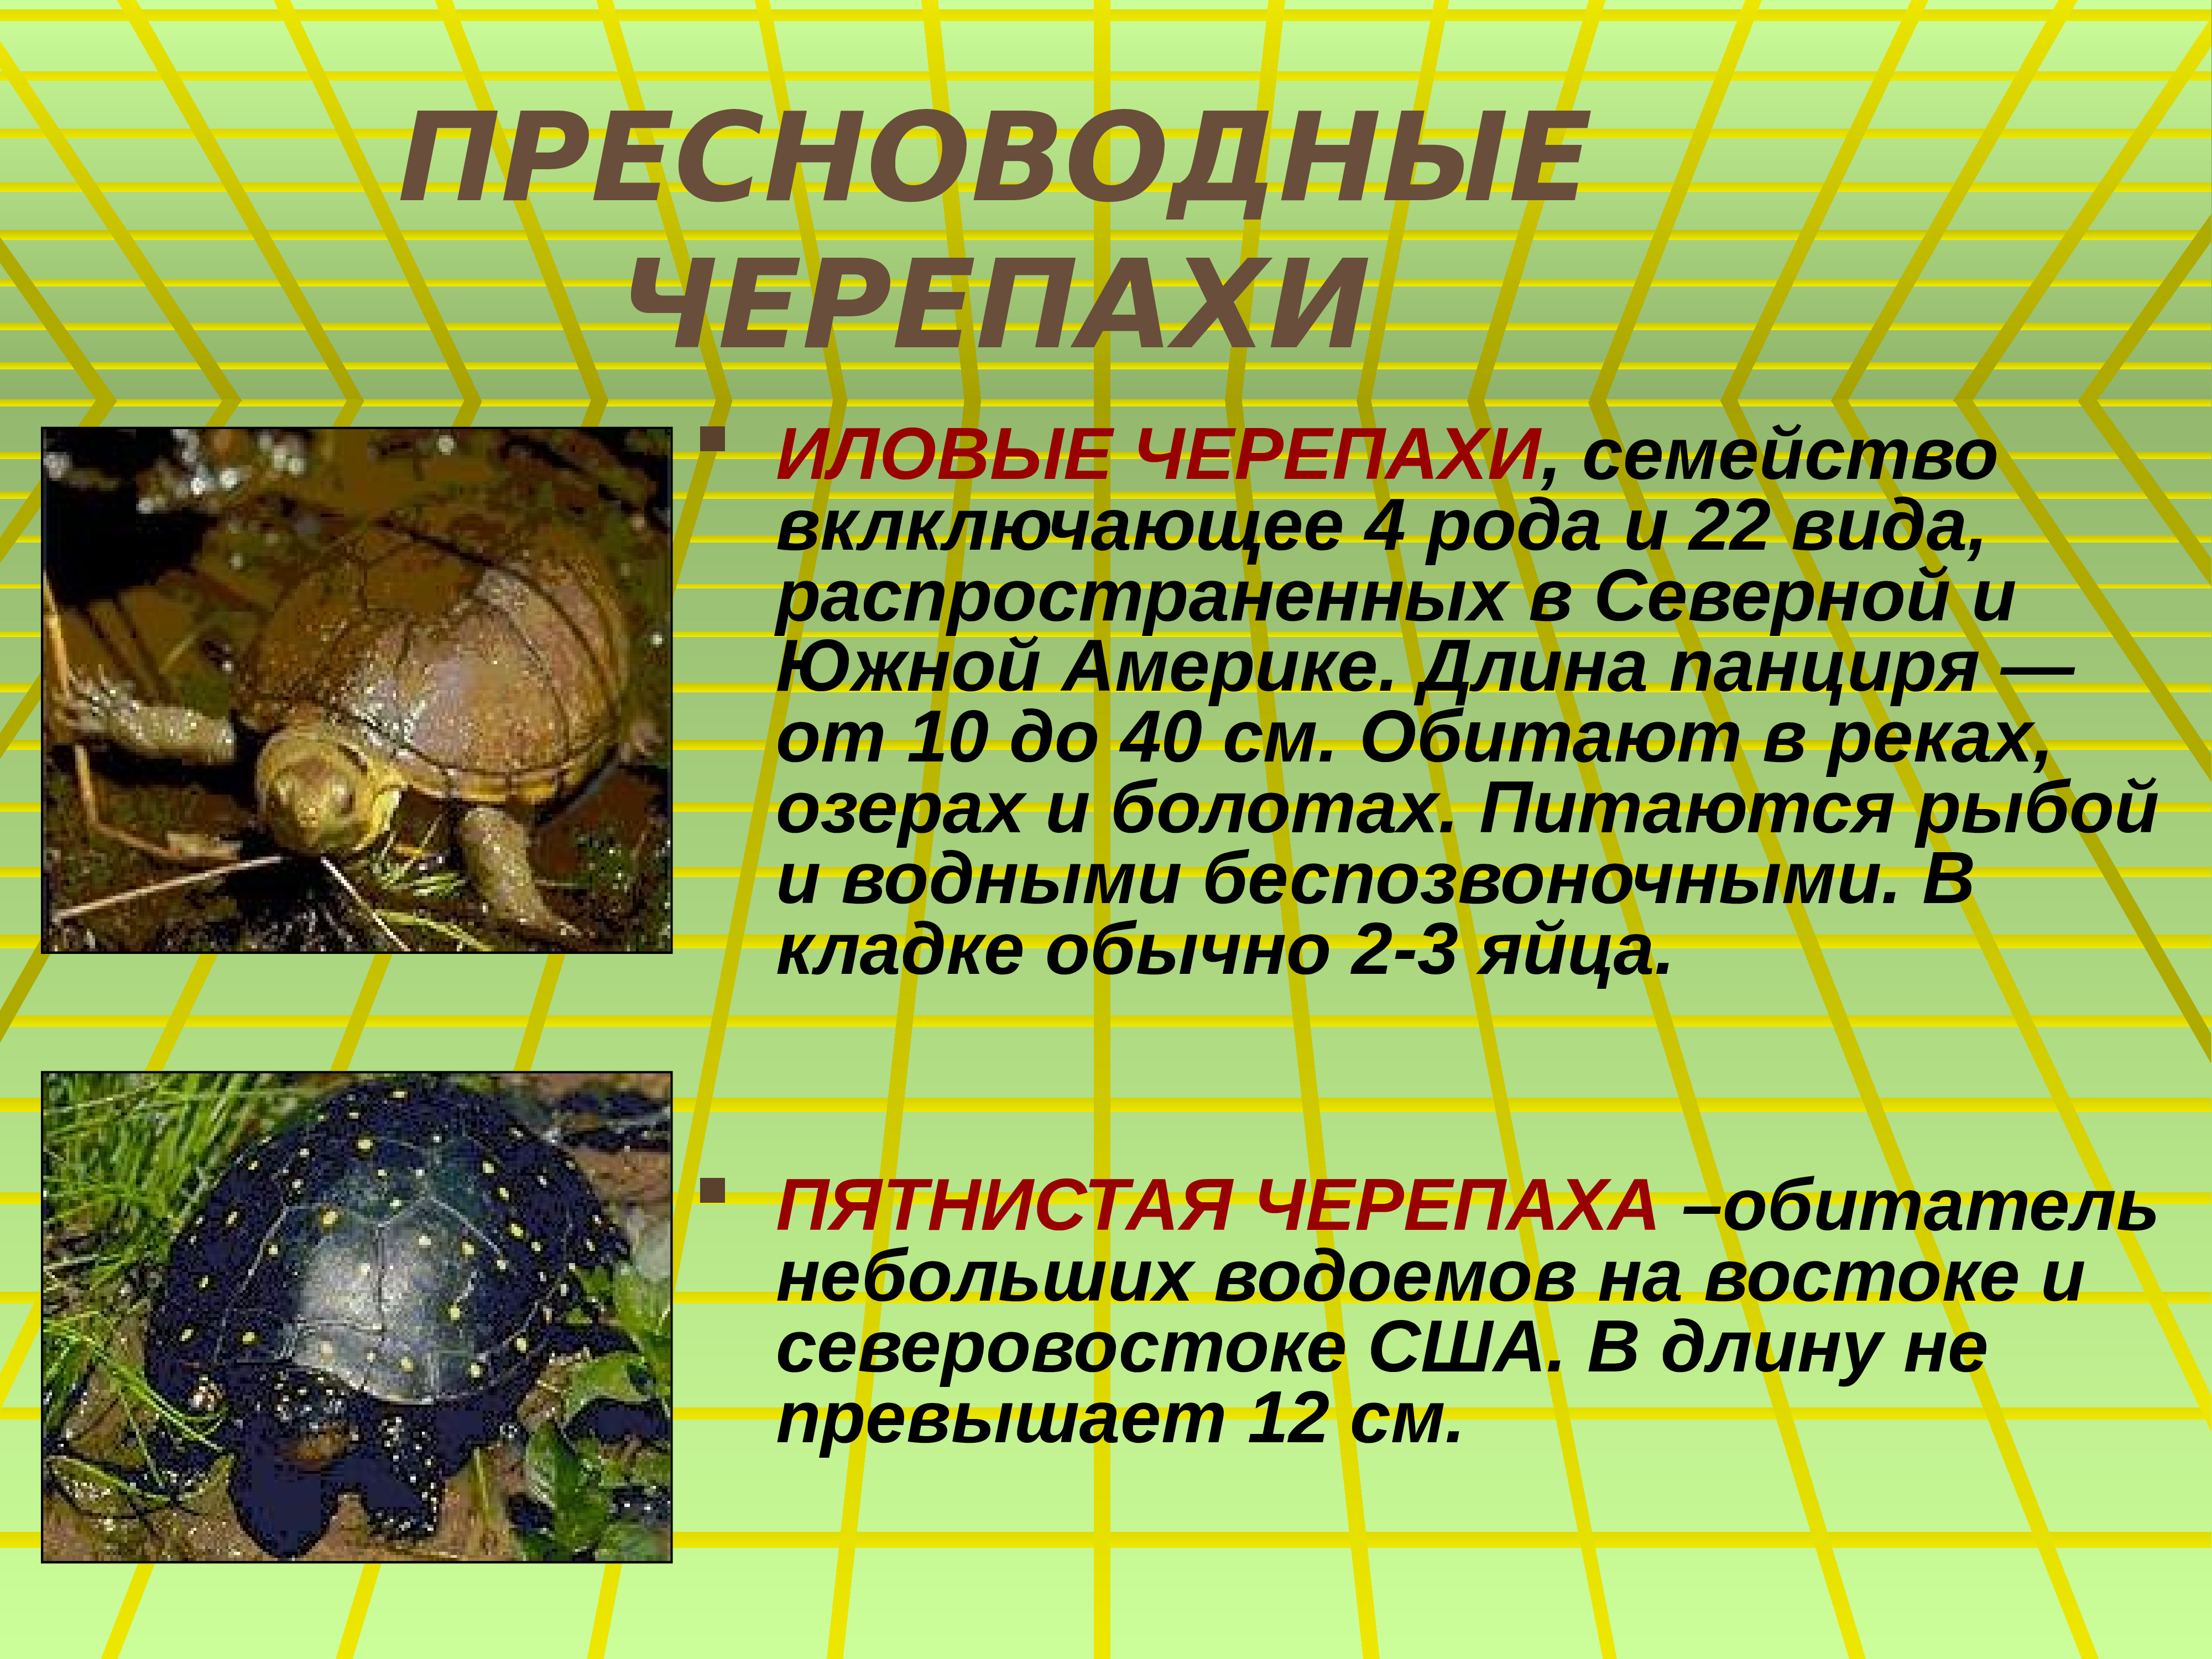 Доклад о черепахе. Сведения о черепахе. Черепаха для презентации. Презентация на тему черепахи. Доклад про черепаху.